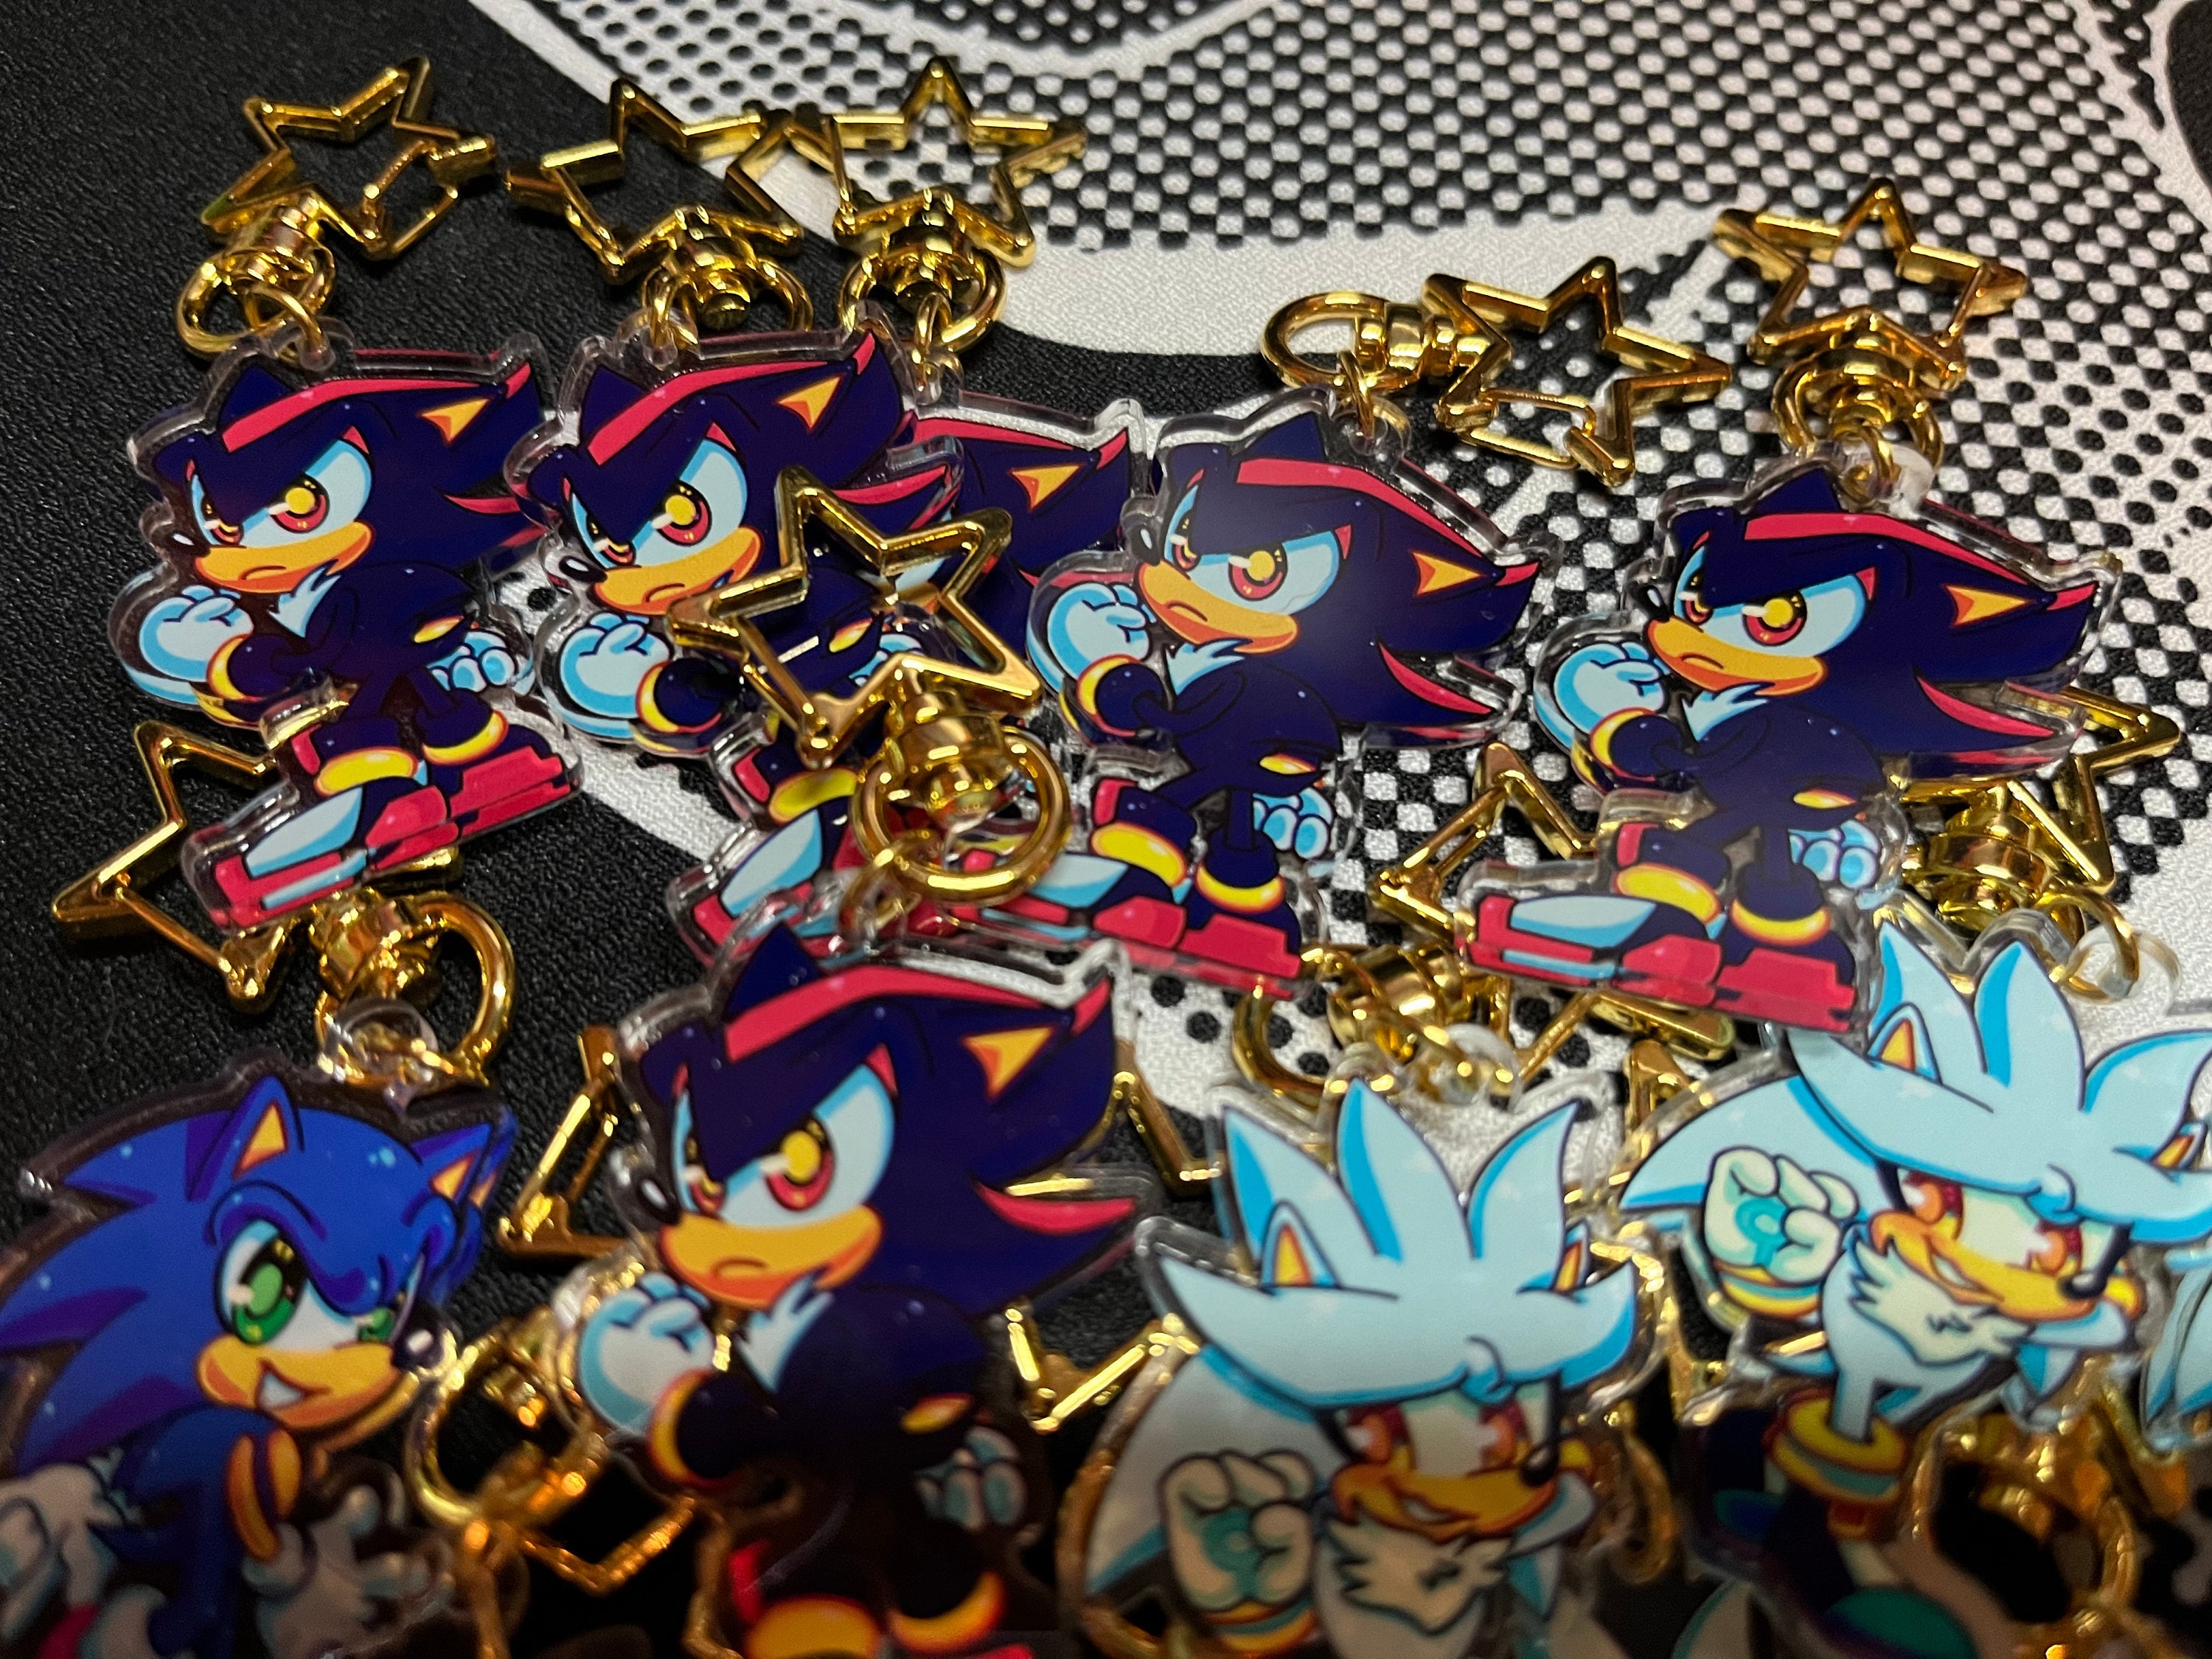 Sonic X: Acrylic Key Chain - Shadow